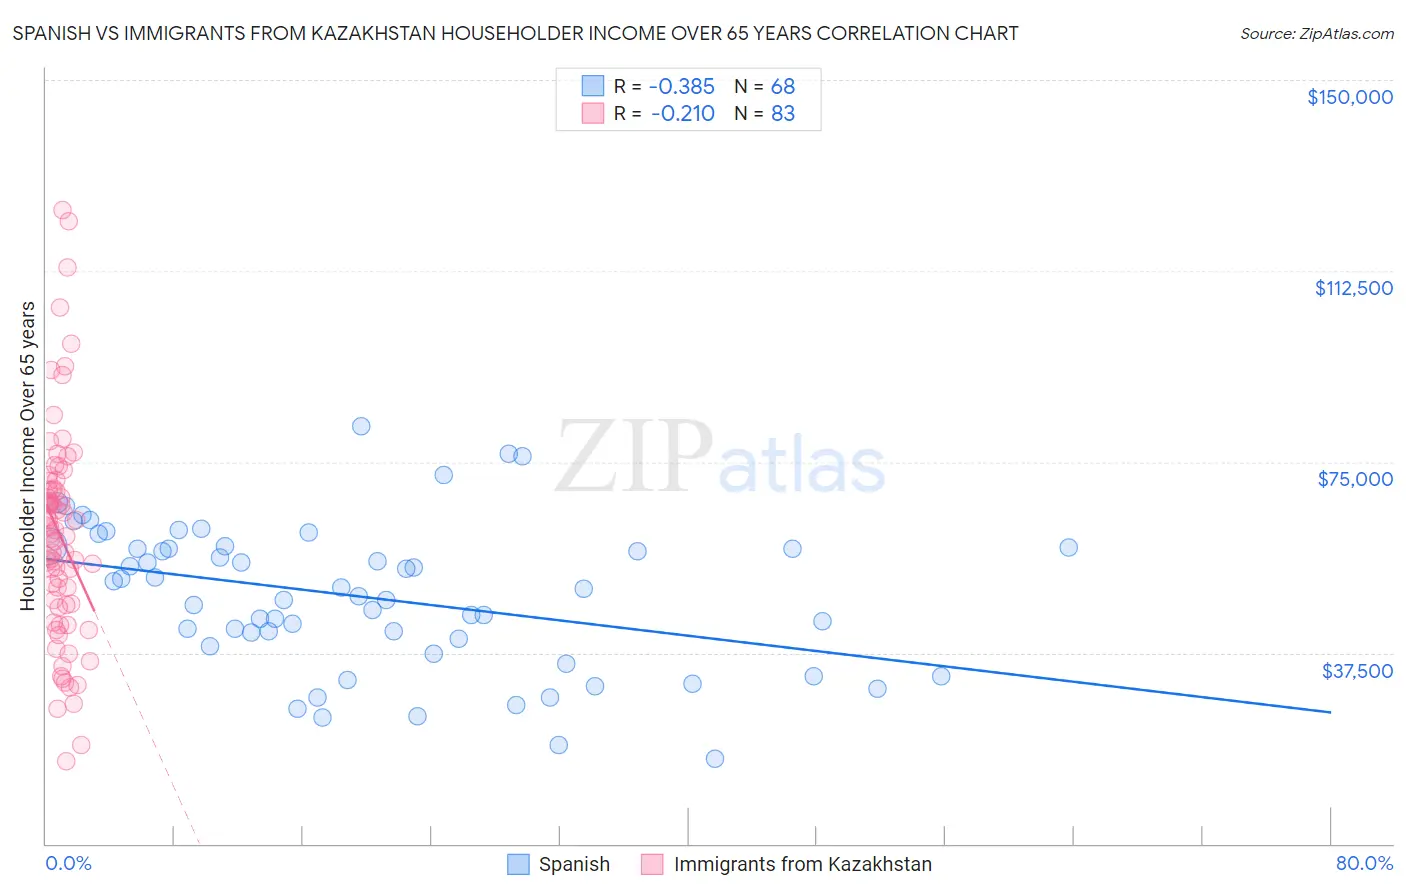 Spanish vs Immigrants from Kazakhstan Householder Income Over 65 years